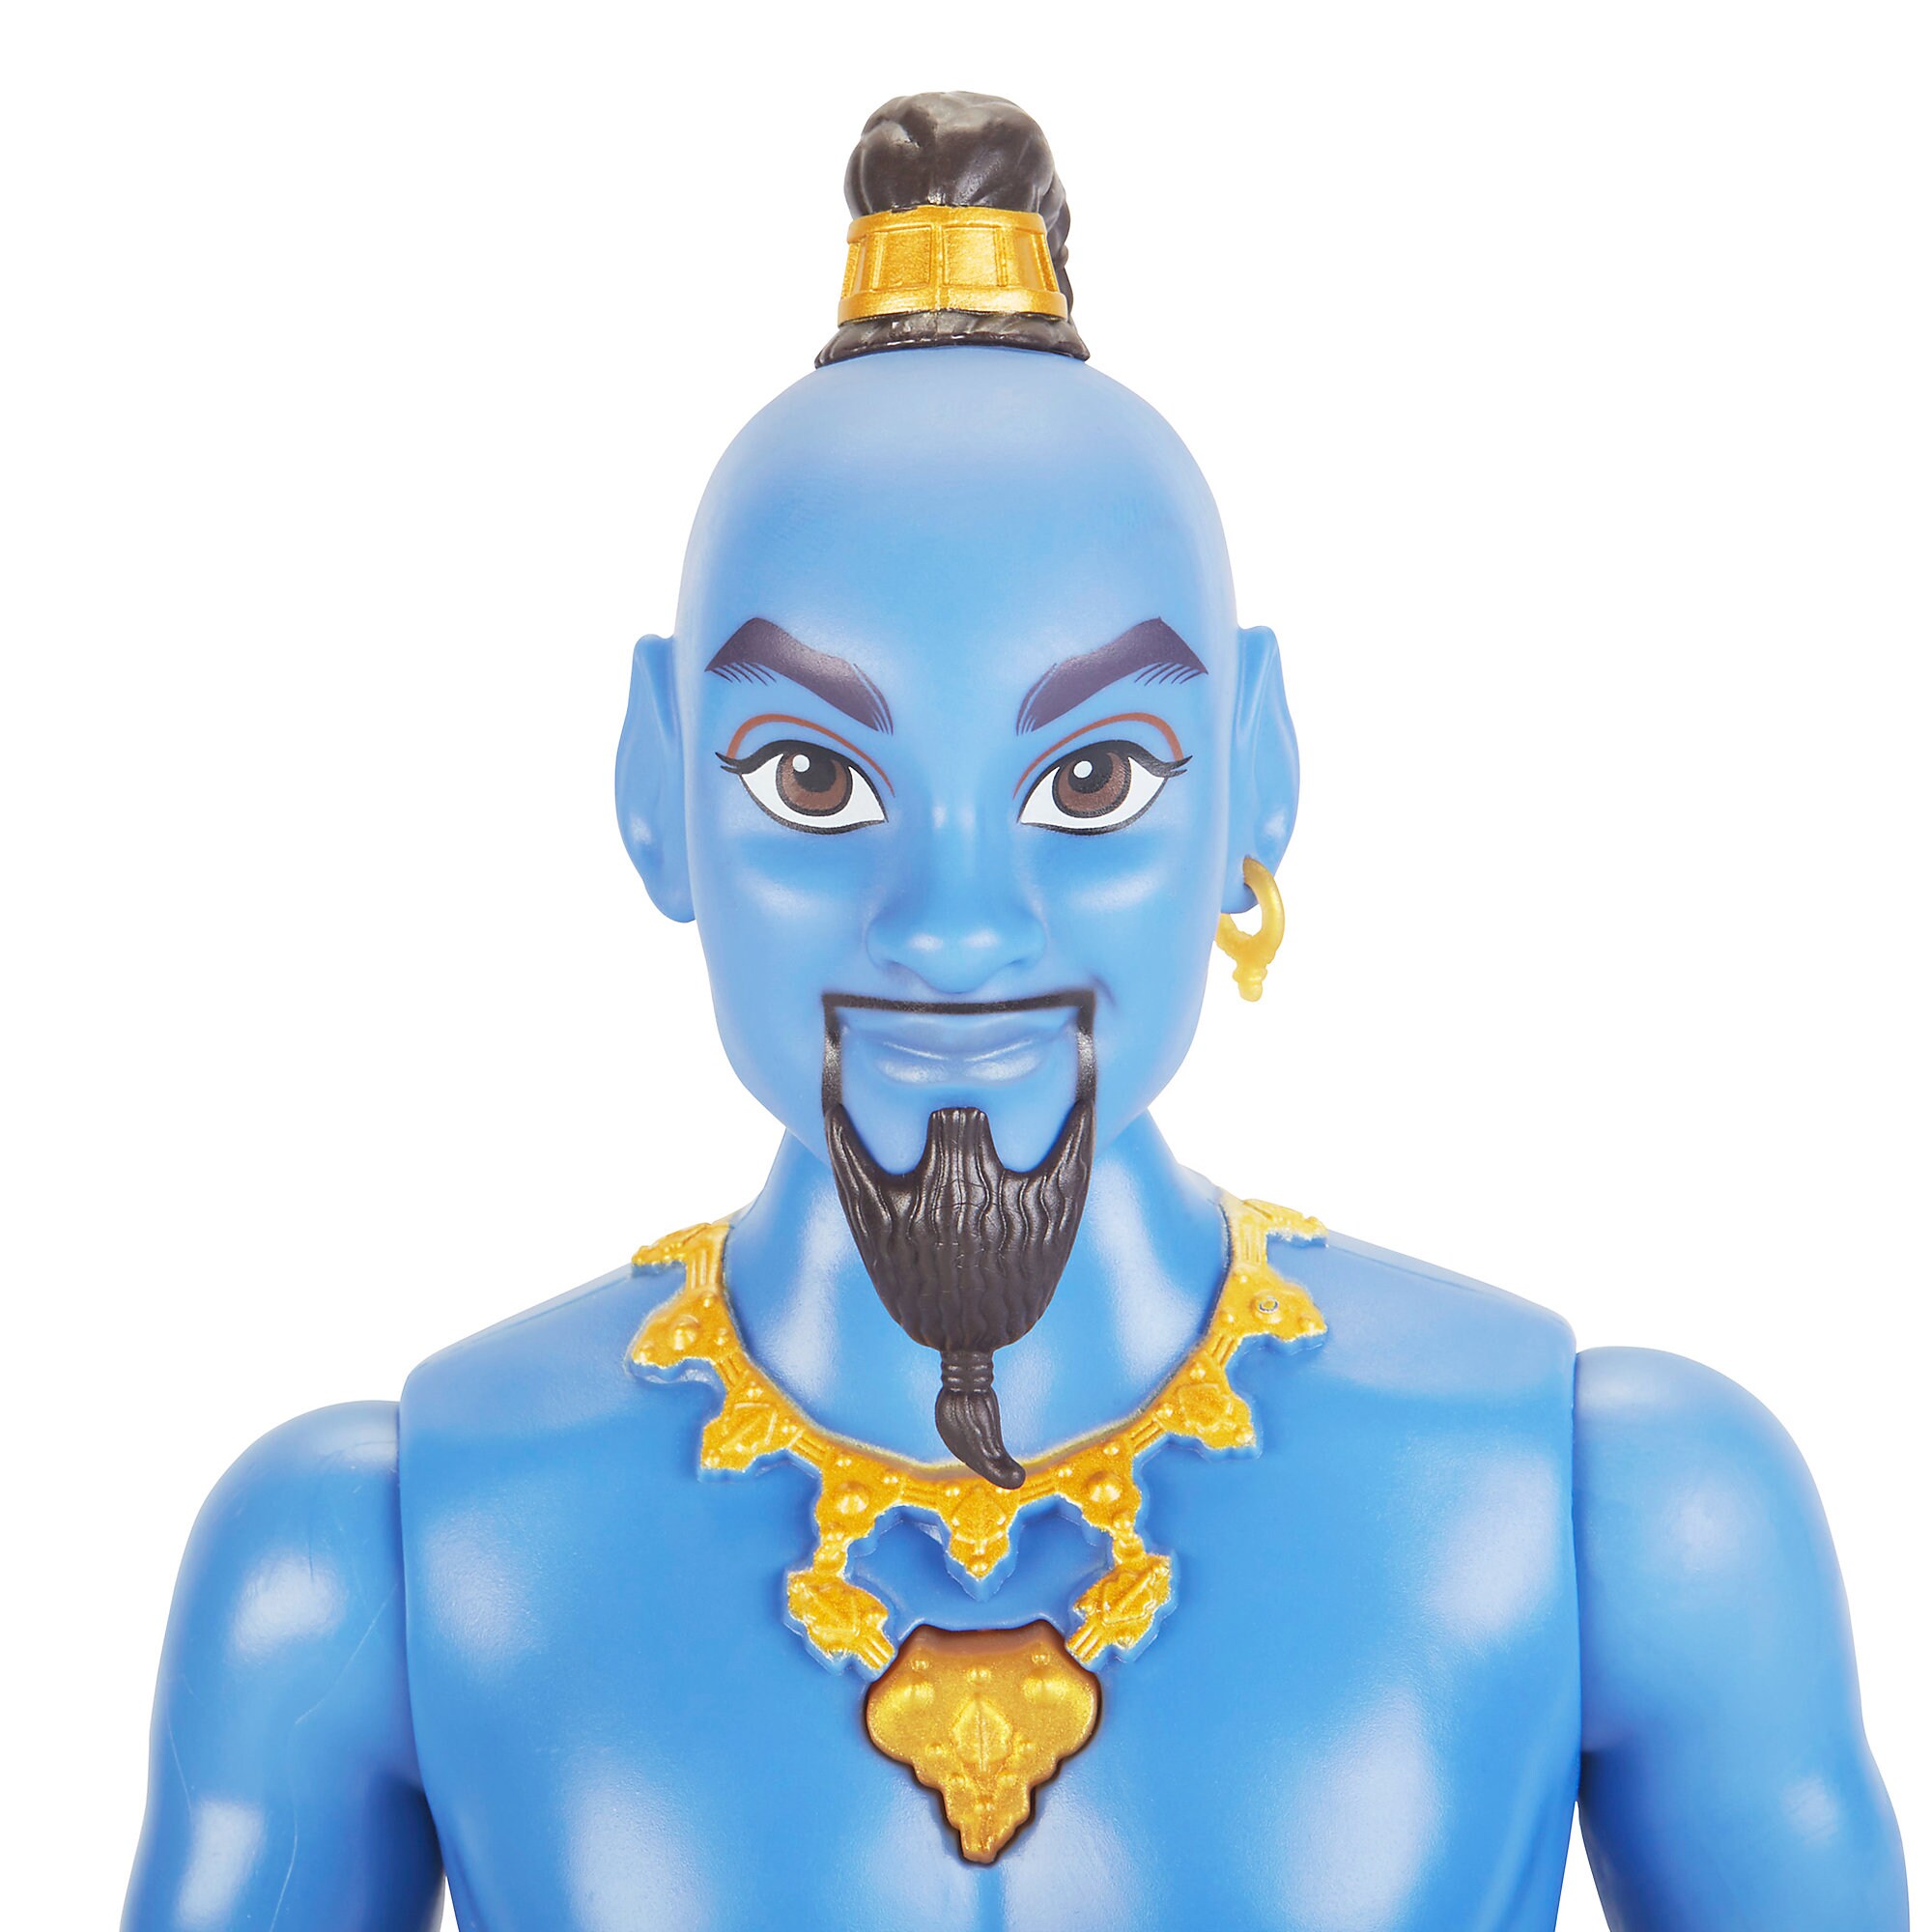 Genie Singing Doll - Aladdin - Live Action Film